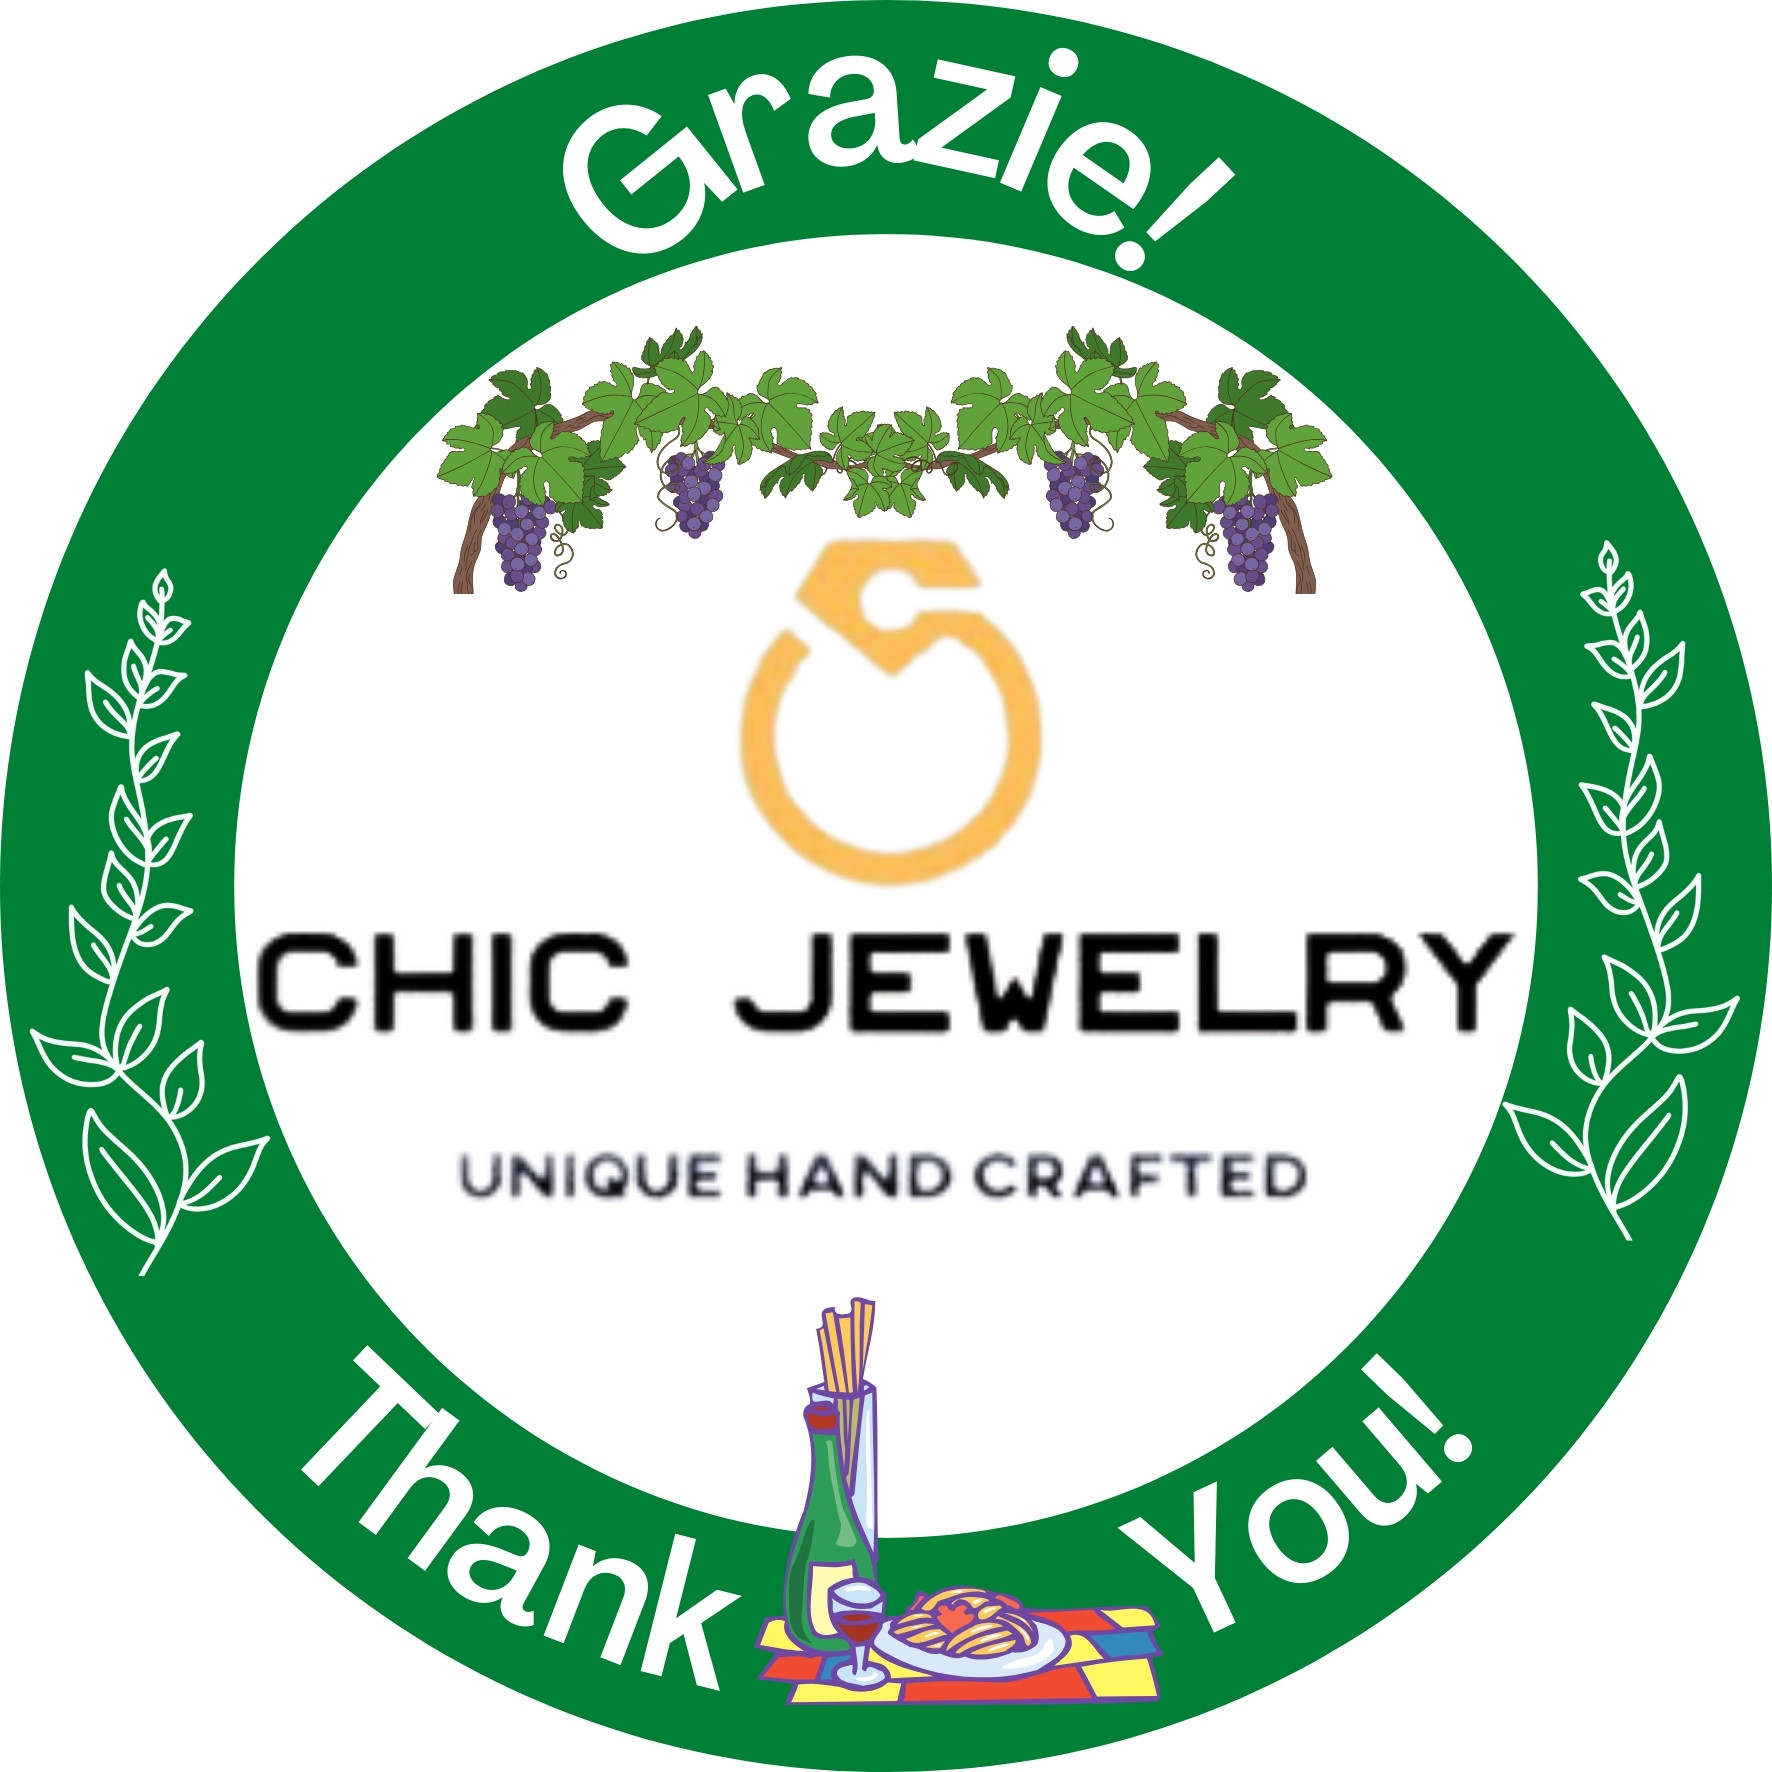 Chic Jewelry Sponsorship